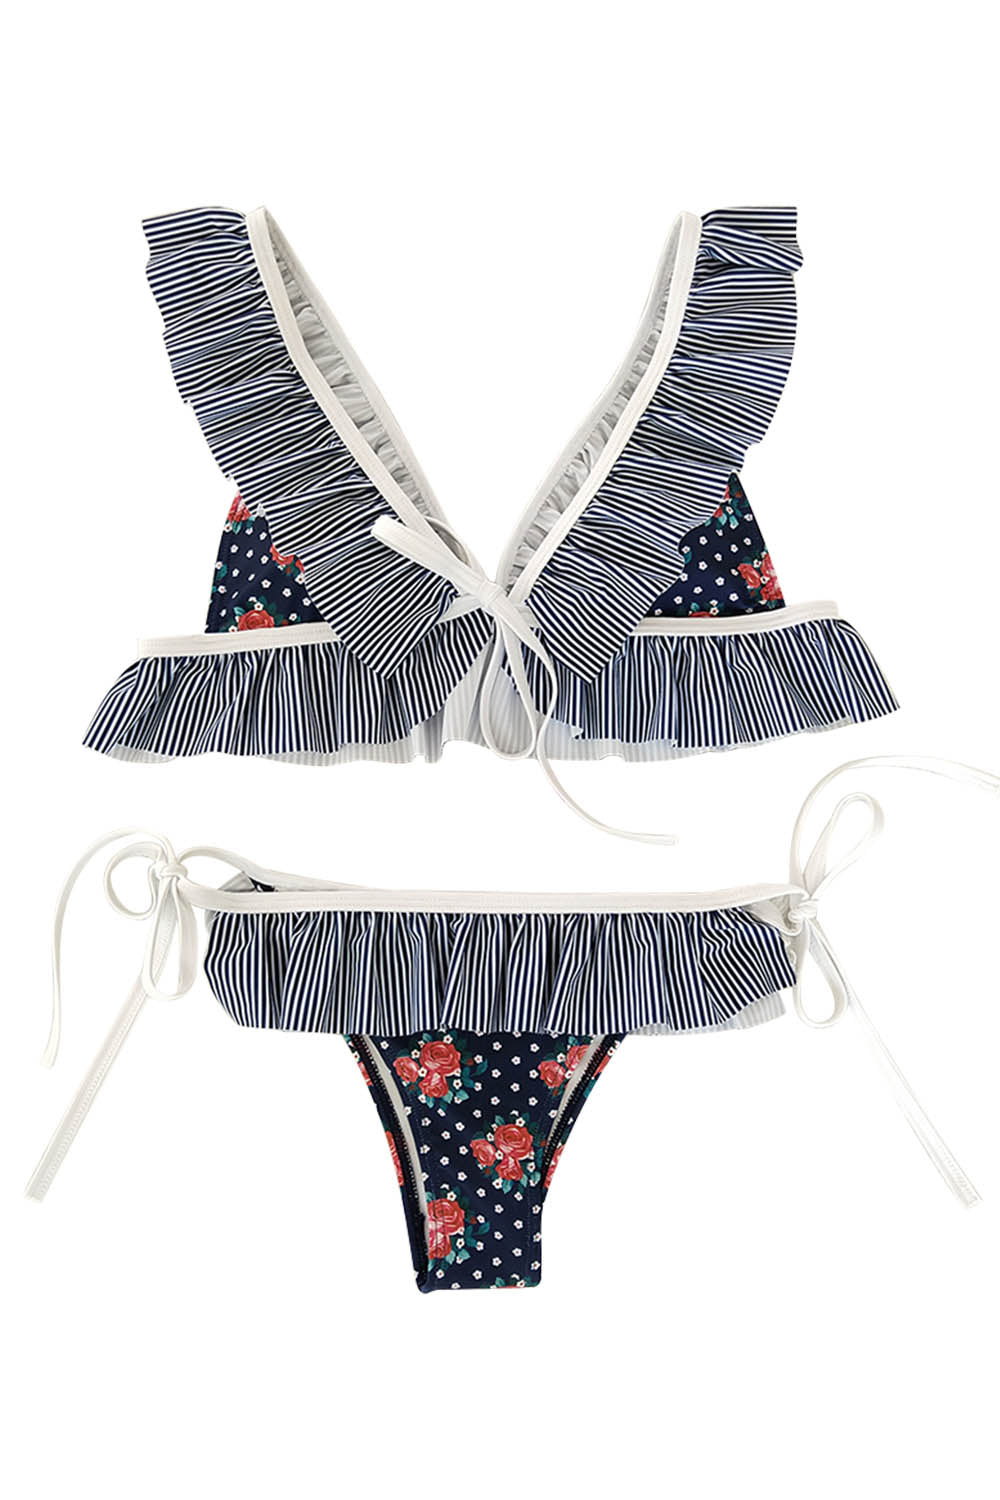 Iyasson Cute Ruffled Trim Adjustable Tied Bikini Set